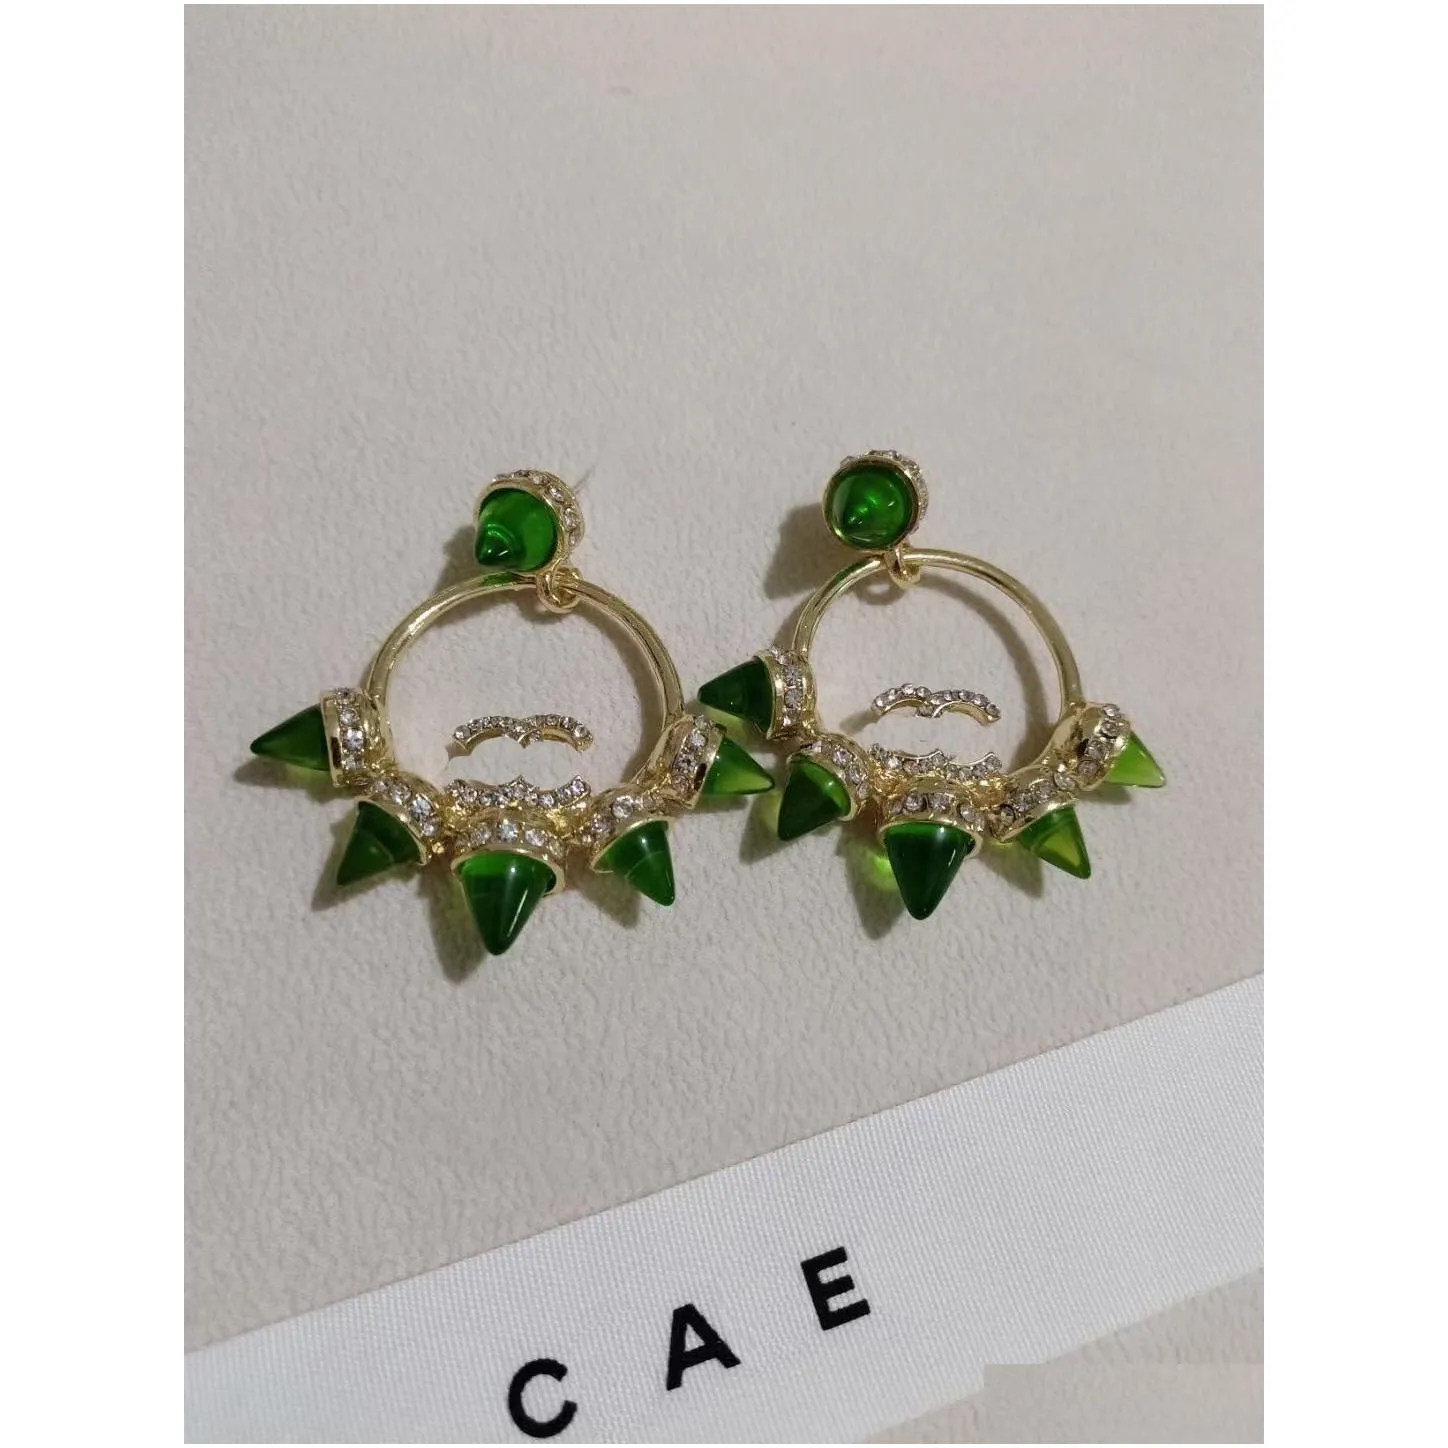 design for women charm gift earrings boutique black luxury jewelry winter diamond stud earrings birthday wedding high quality